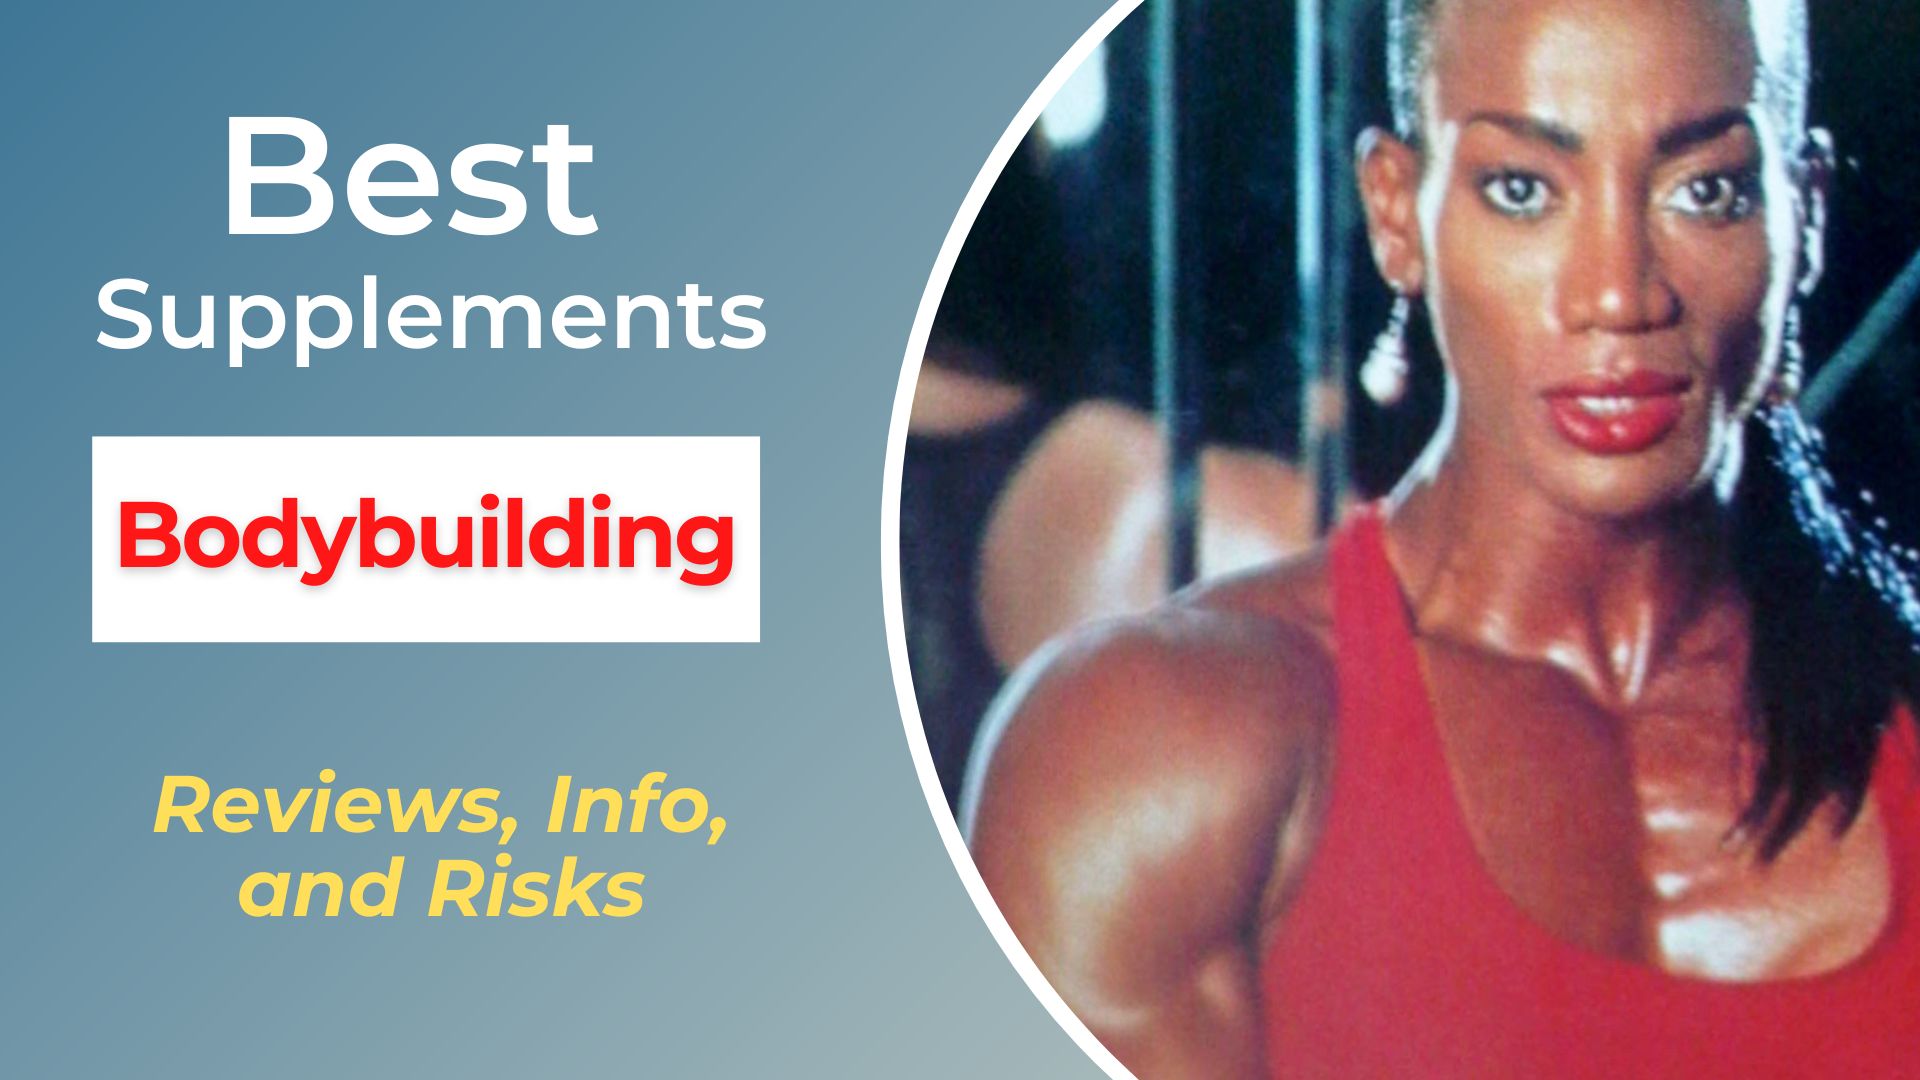 Best Supplements for Bodybuilding